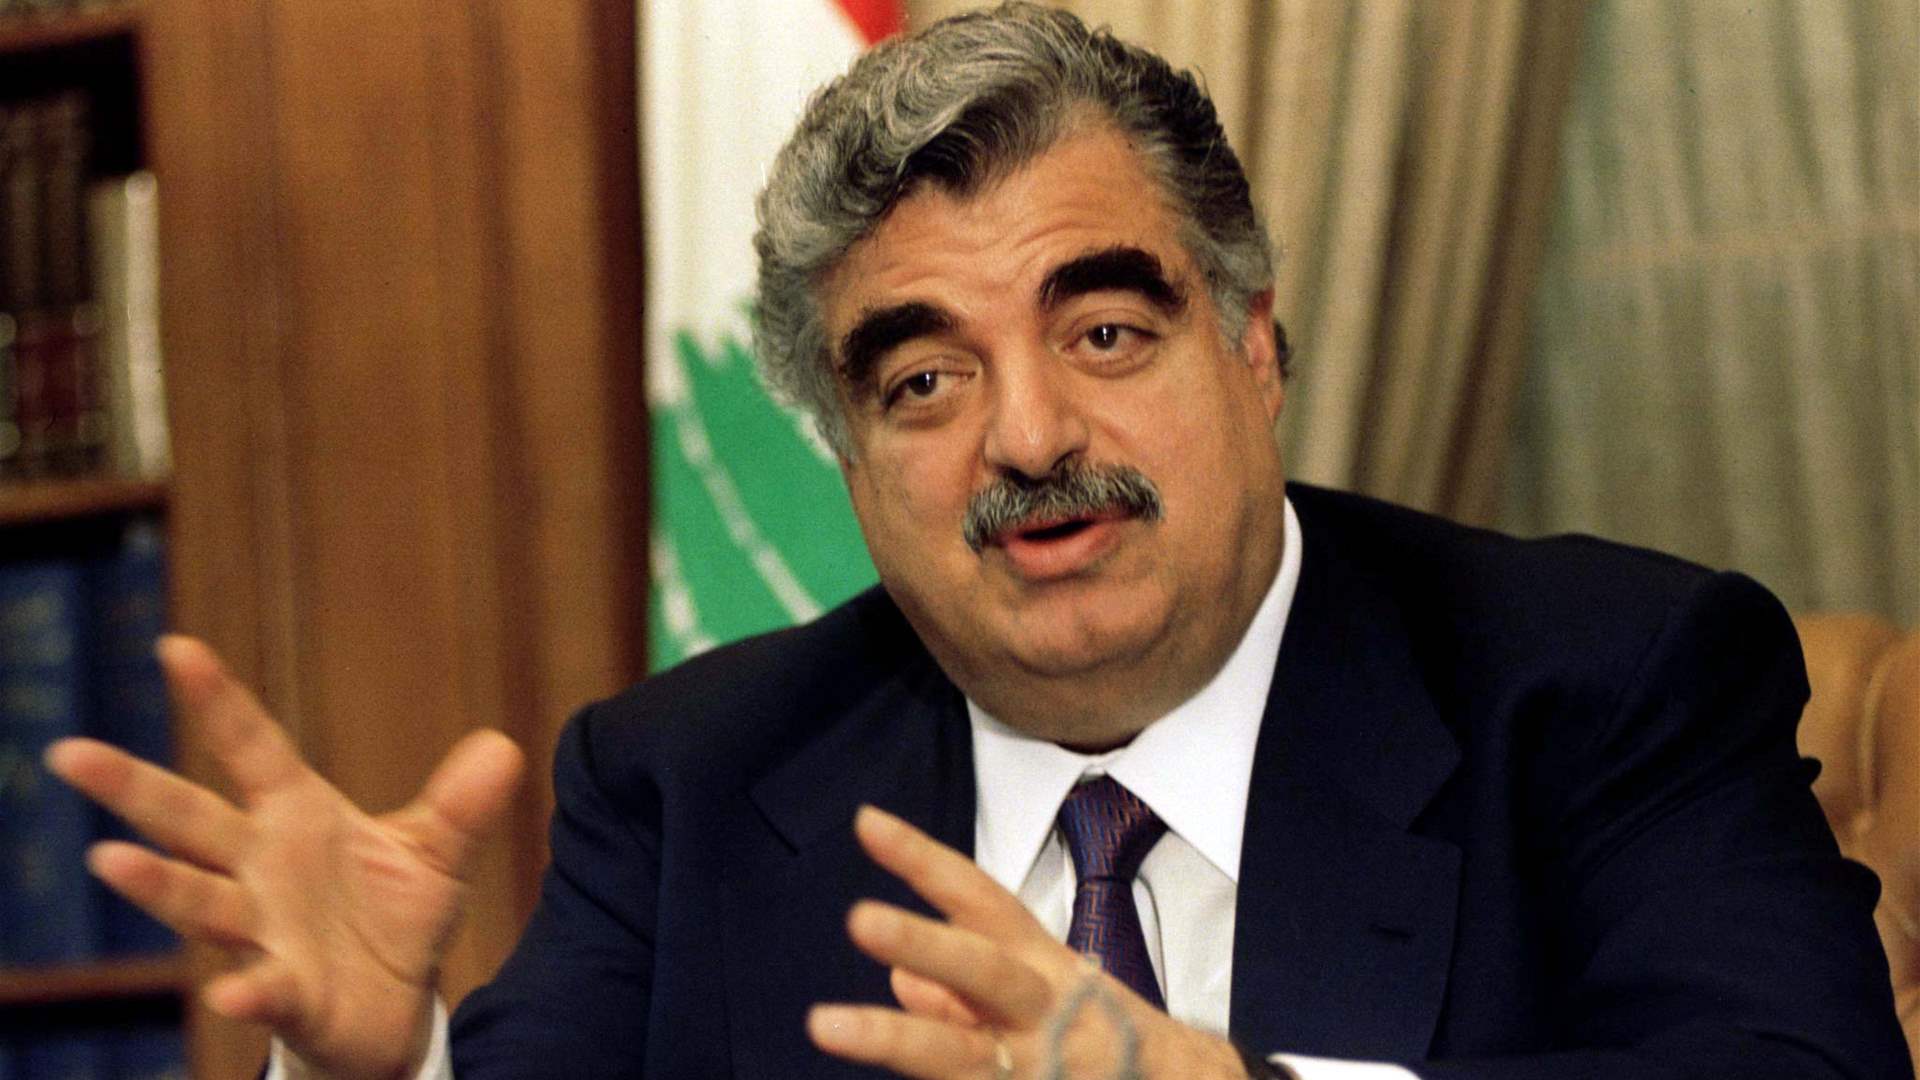 In Lebanon, tensions rise amid diplomatic talks as Rafic Hariri is remembered